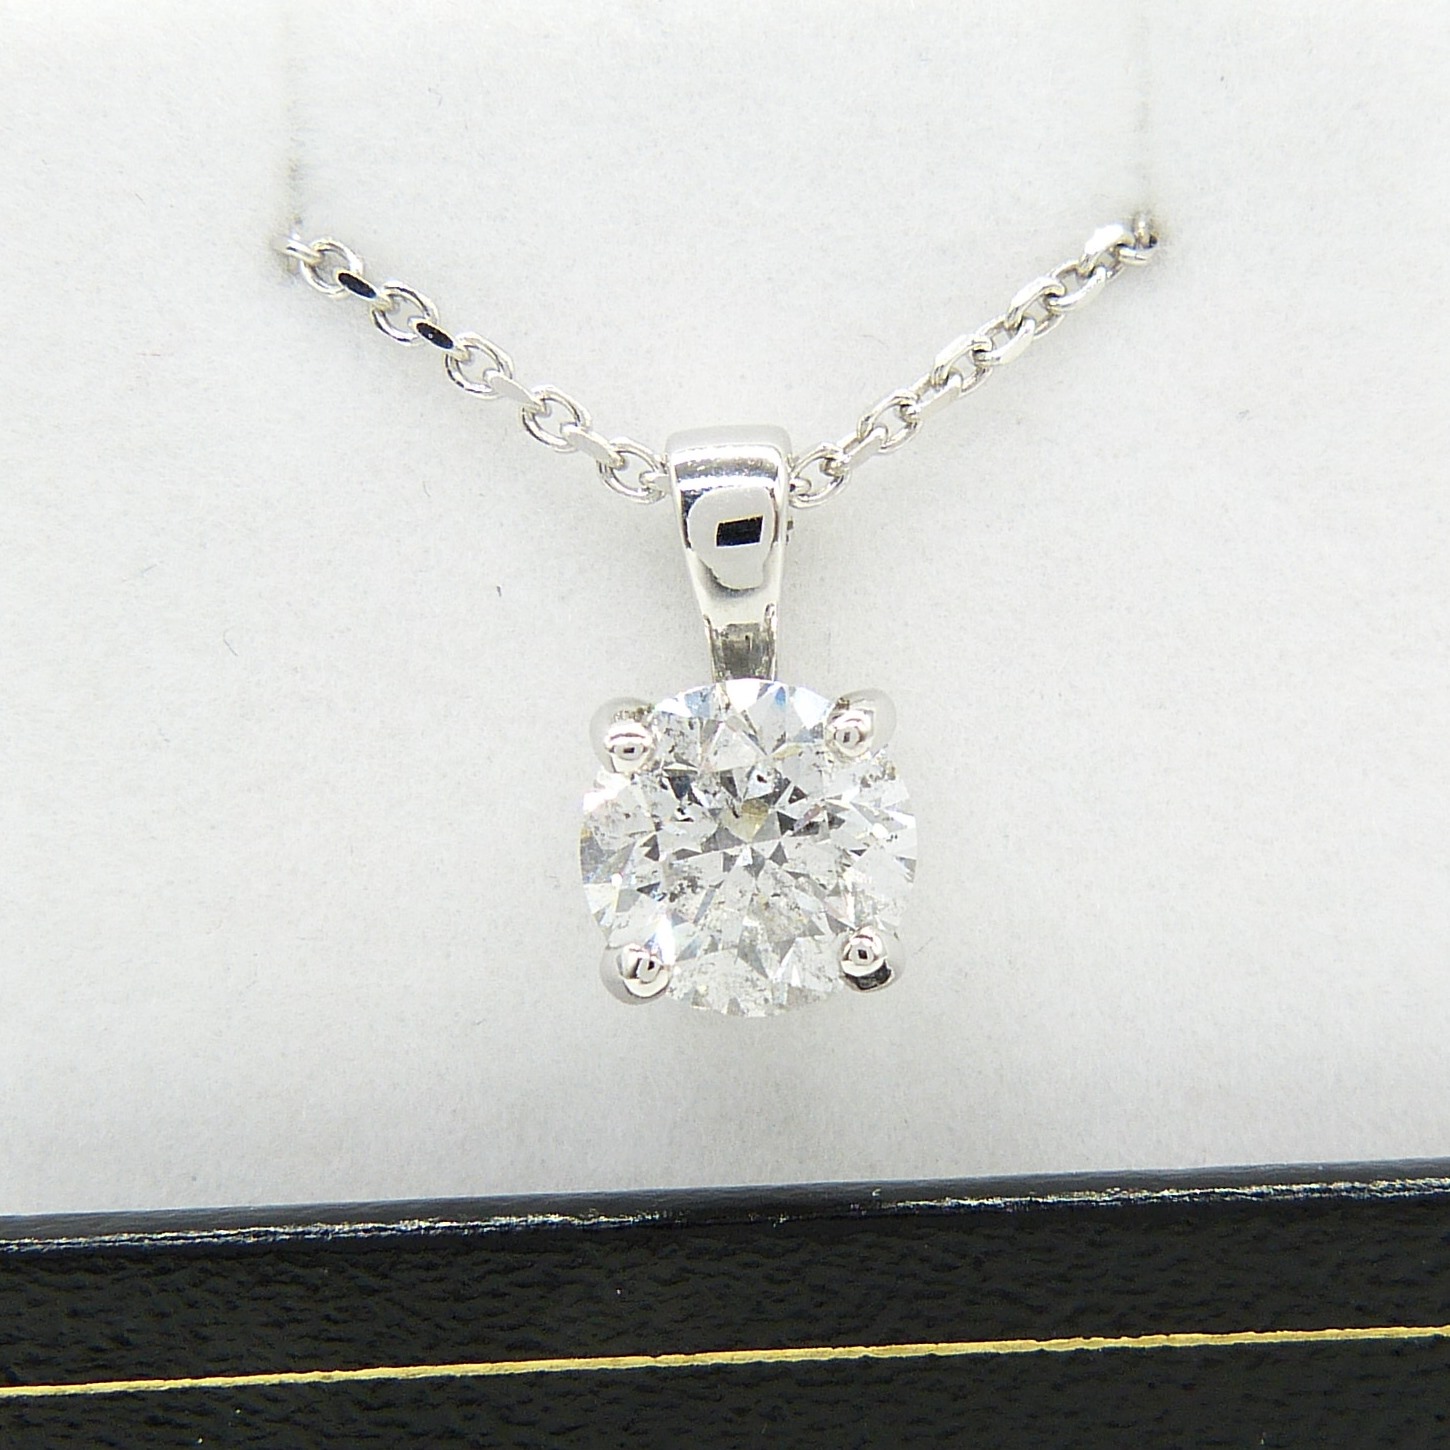 Certificated 1.24 carat, E colour round brilliant-cut diamond solitaire necklace, 18ct white gold